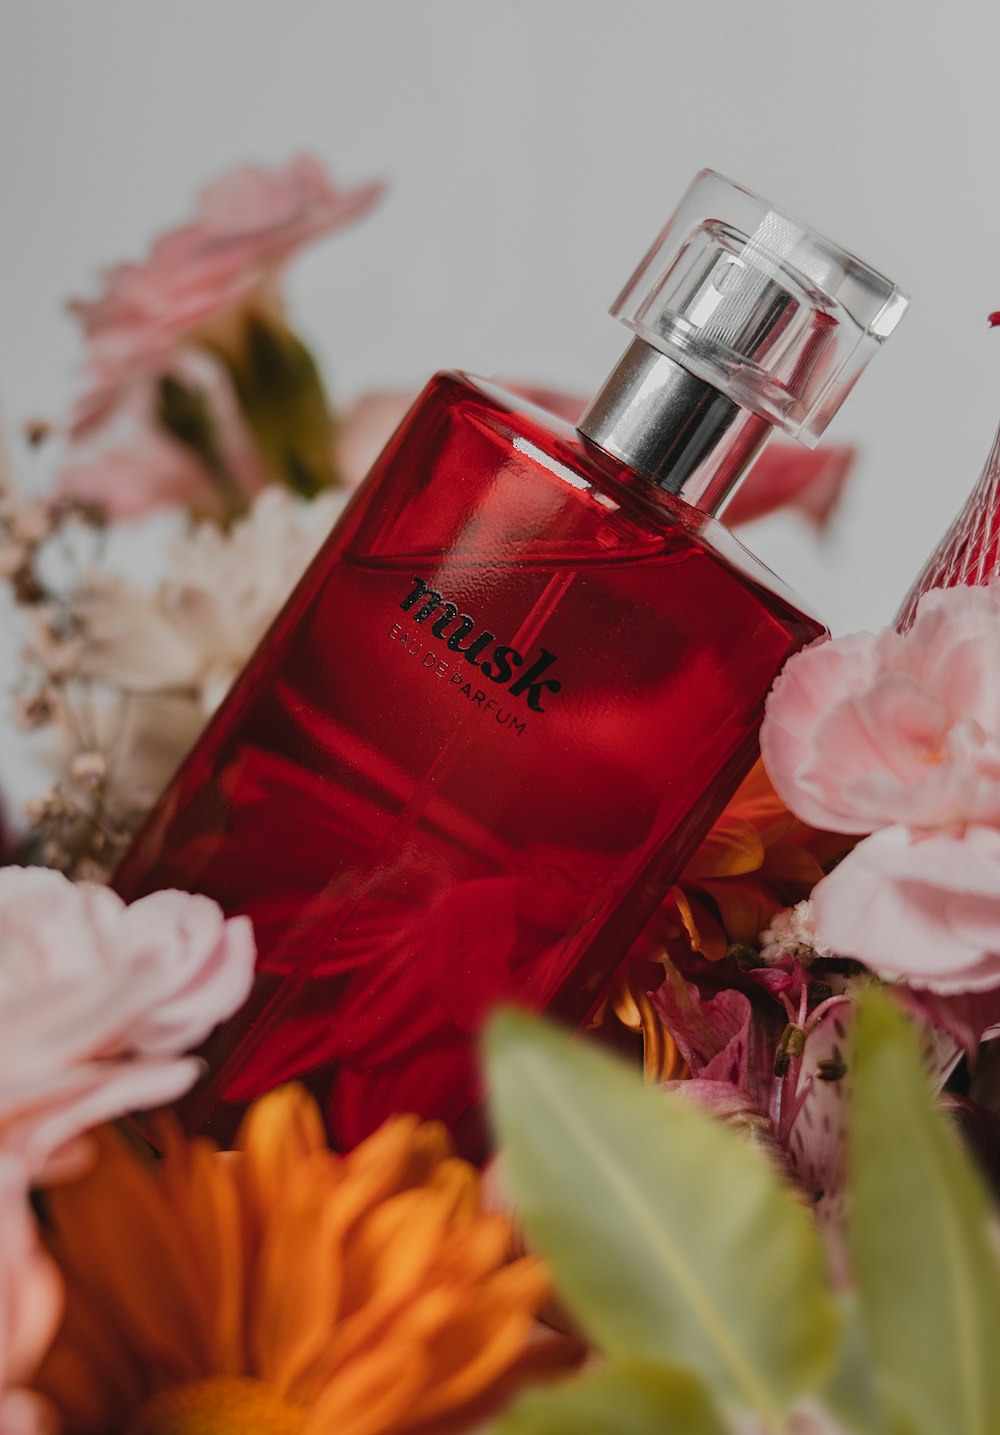 pink perfume bottle beside pink roses